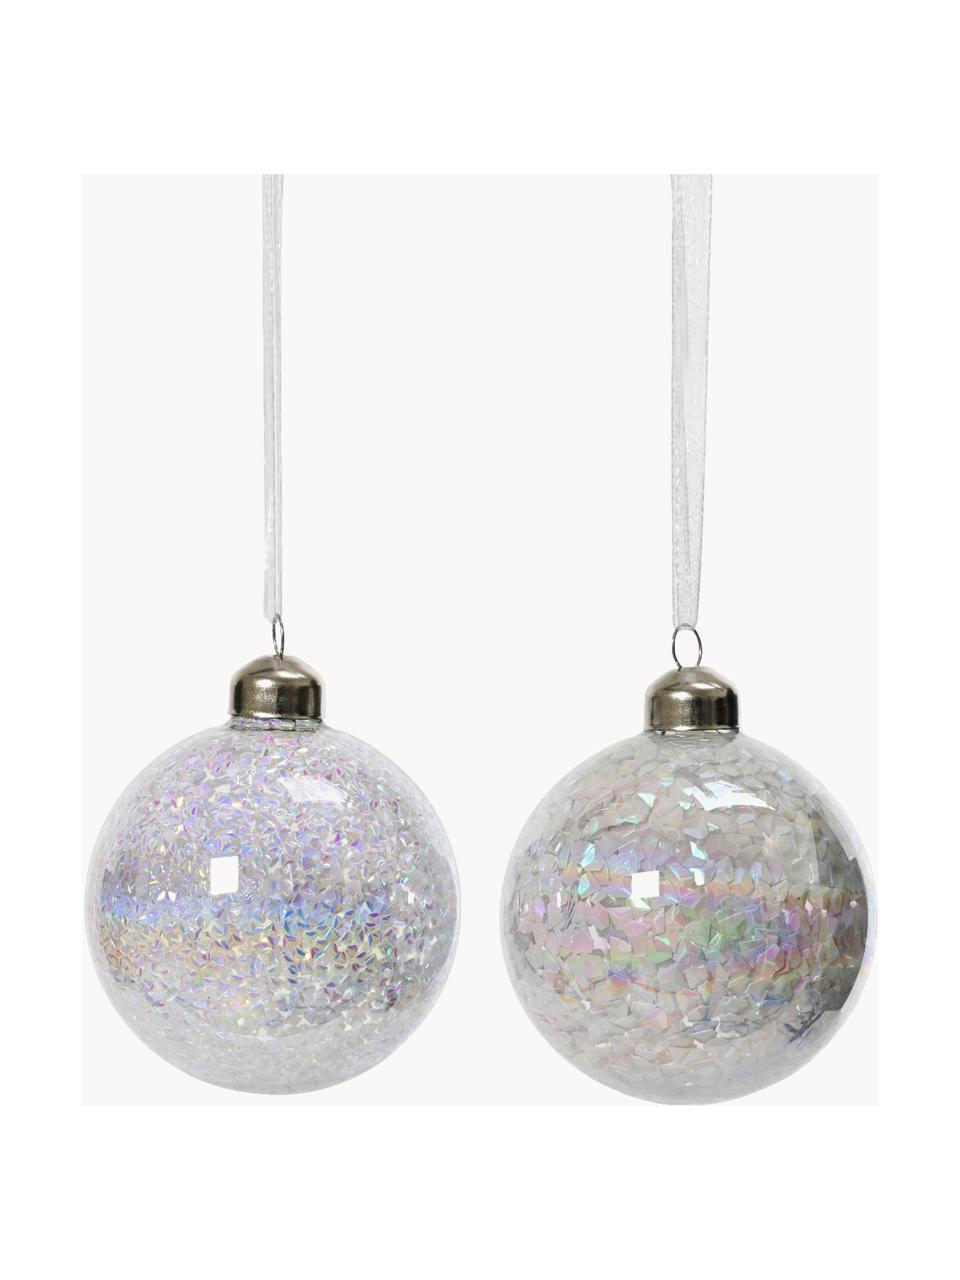 Set de bolas de Navidad Elena, 12 uds., Vidrio, Blanco iridiscente, Ø 8 cm